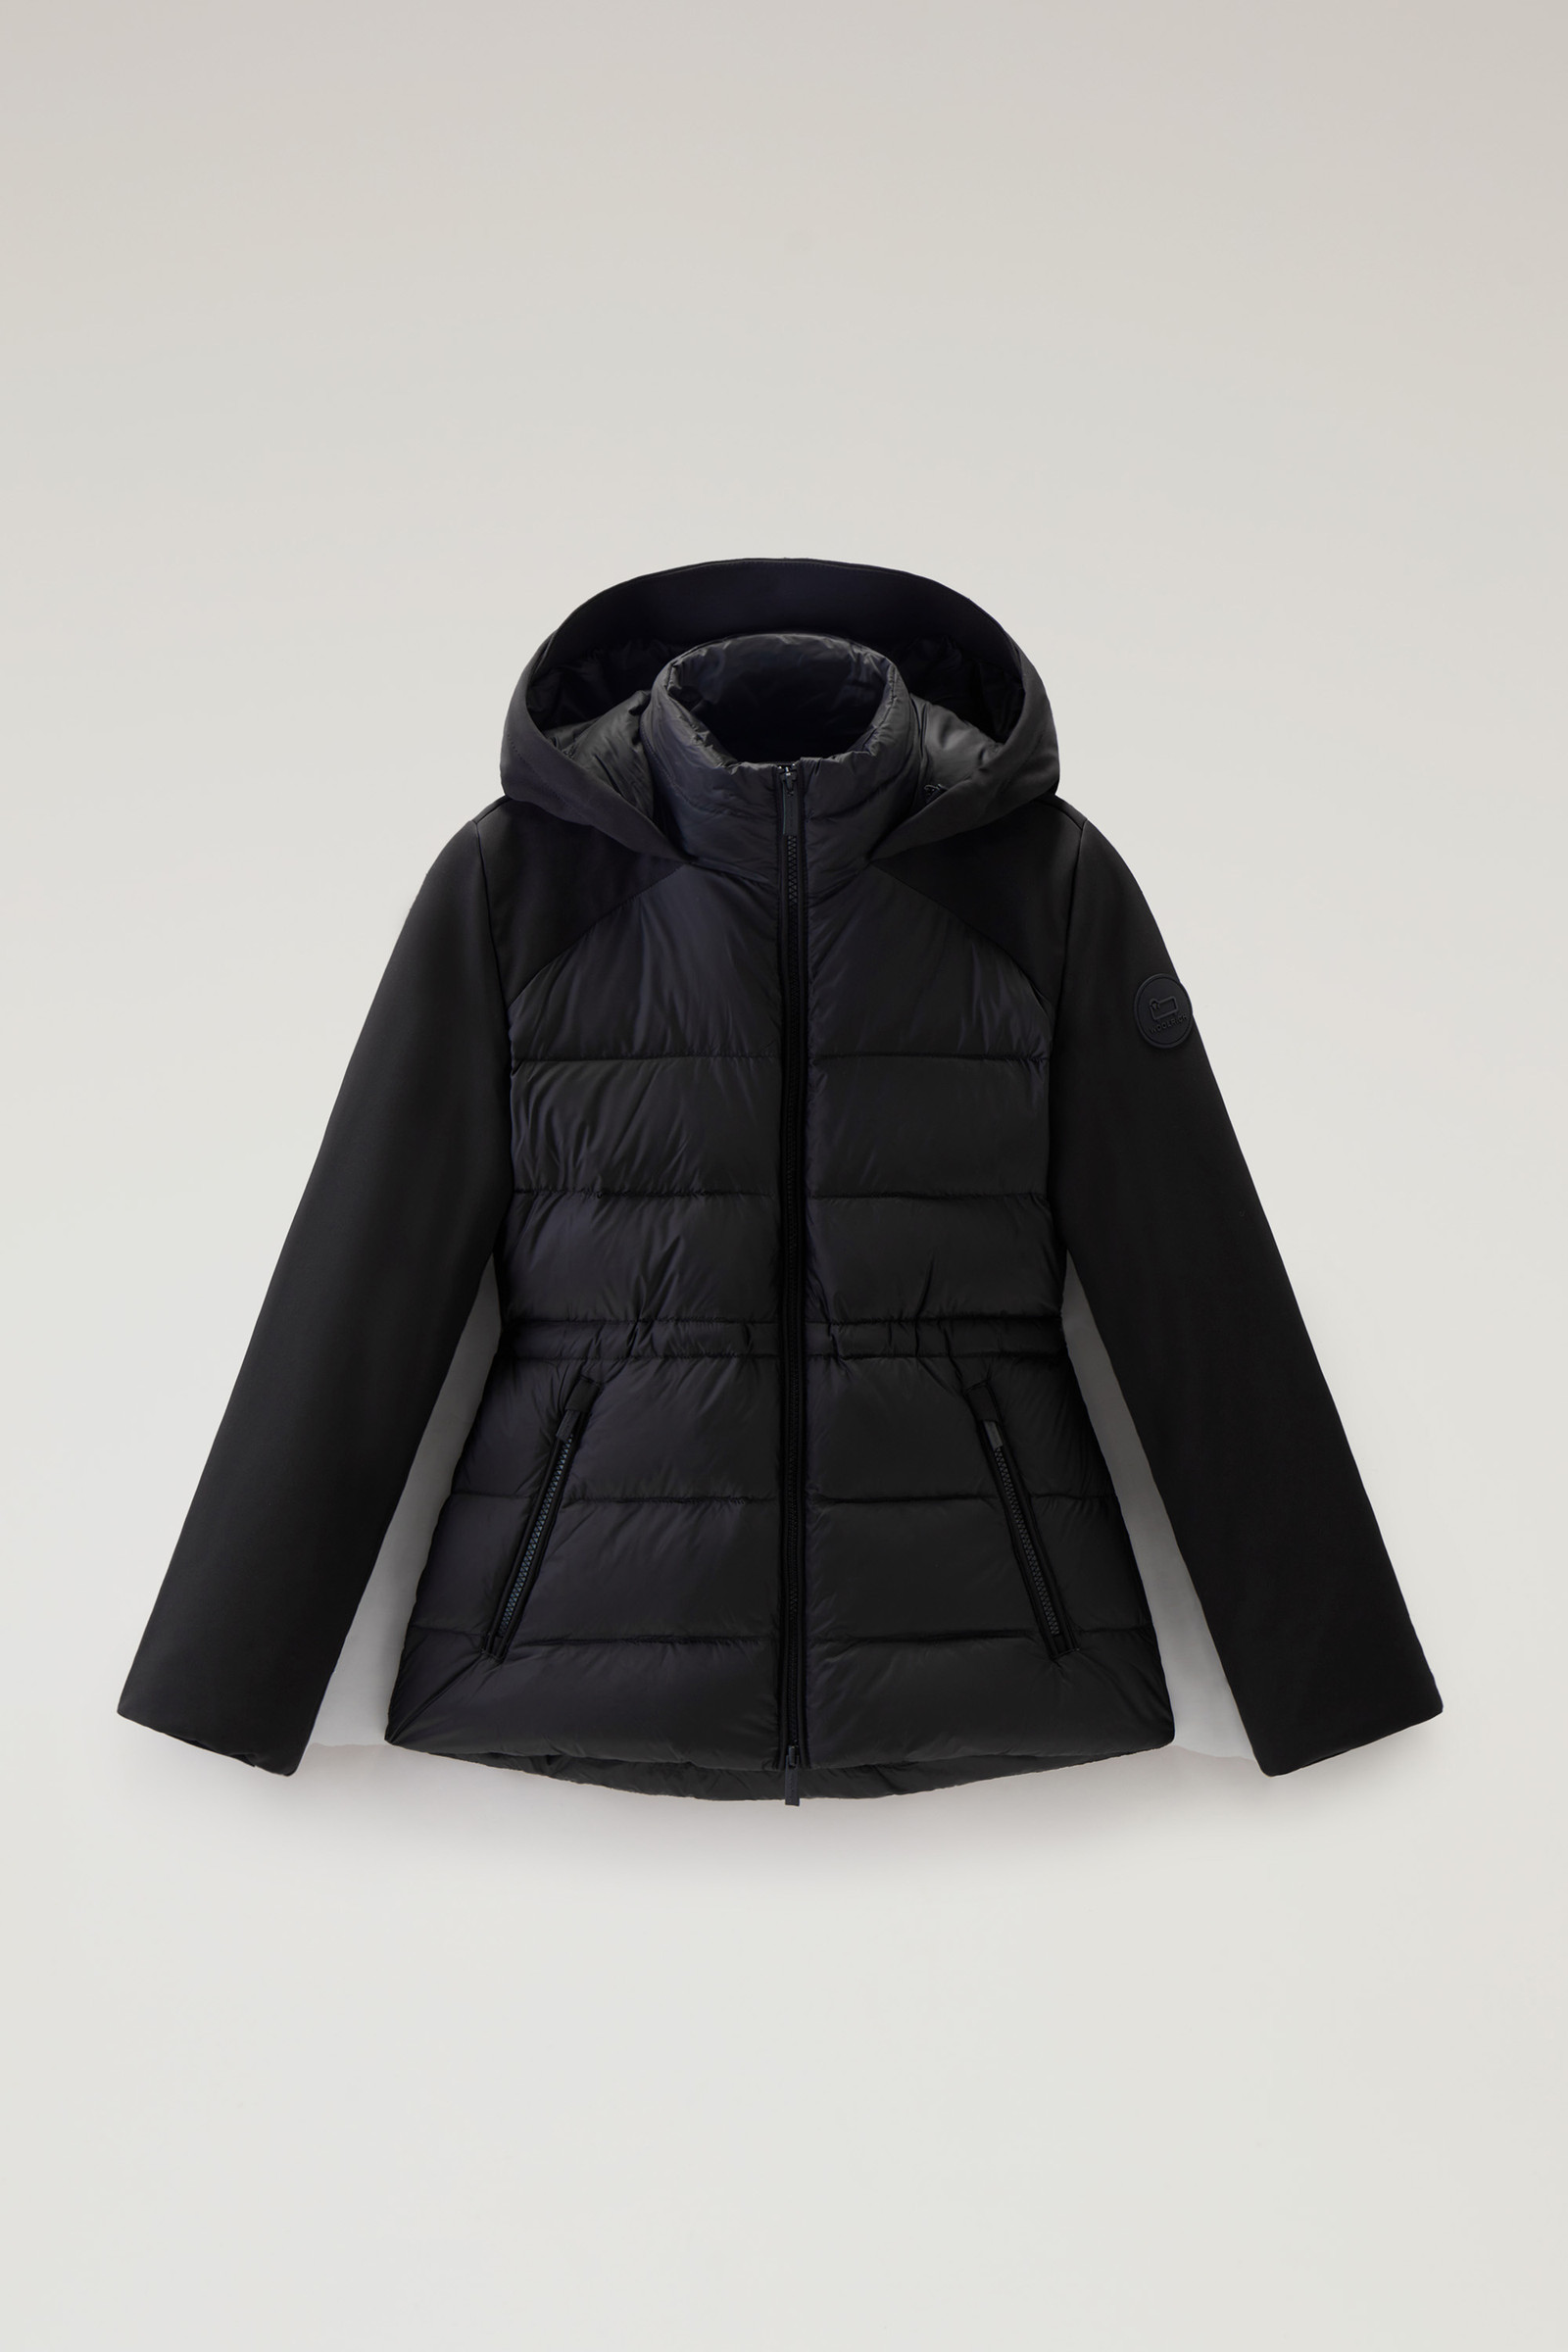 Hybrid Hooded Down Jacket in Tech Softshell Black